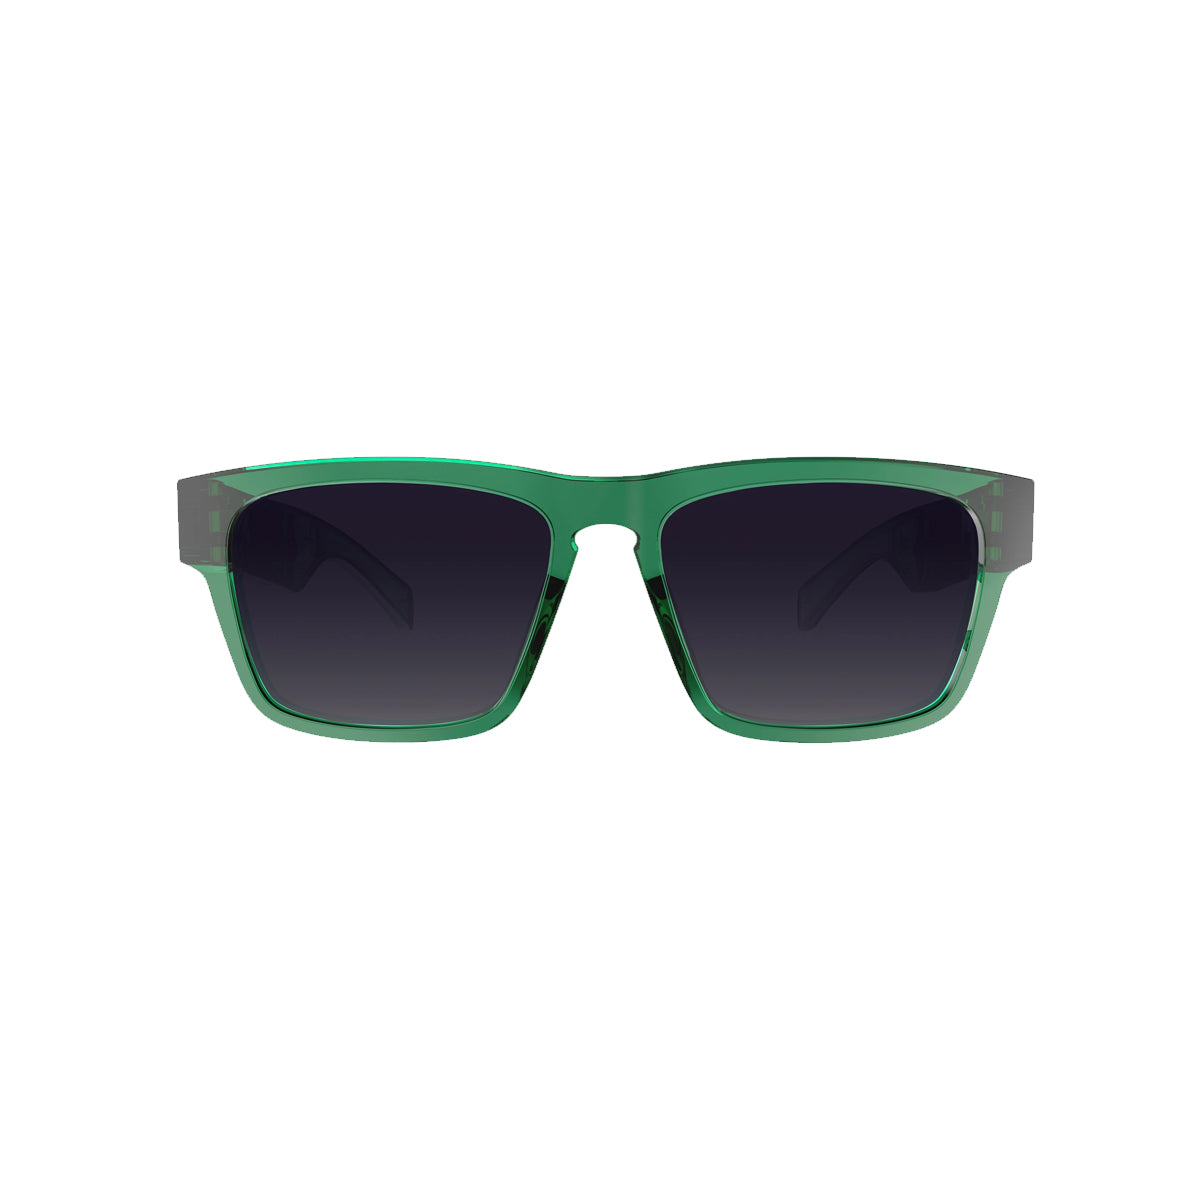 Solos Smart Audio Glasses, Jade Green | Rokit - Wake Concept Store  